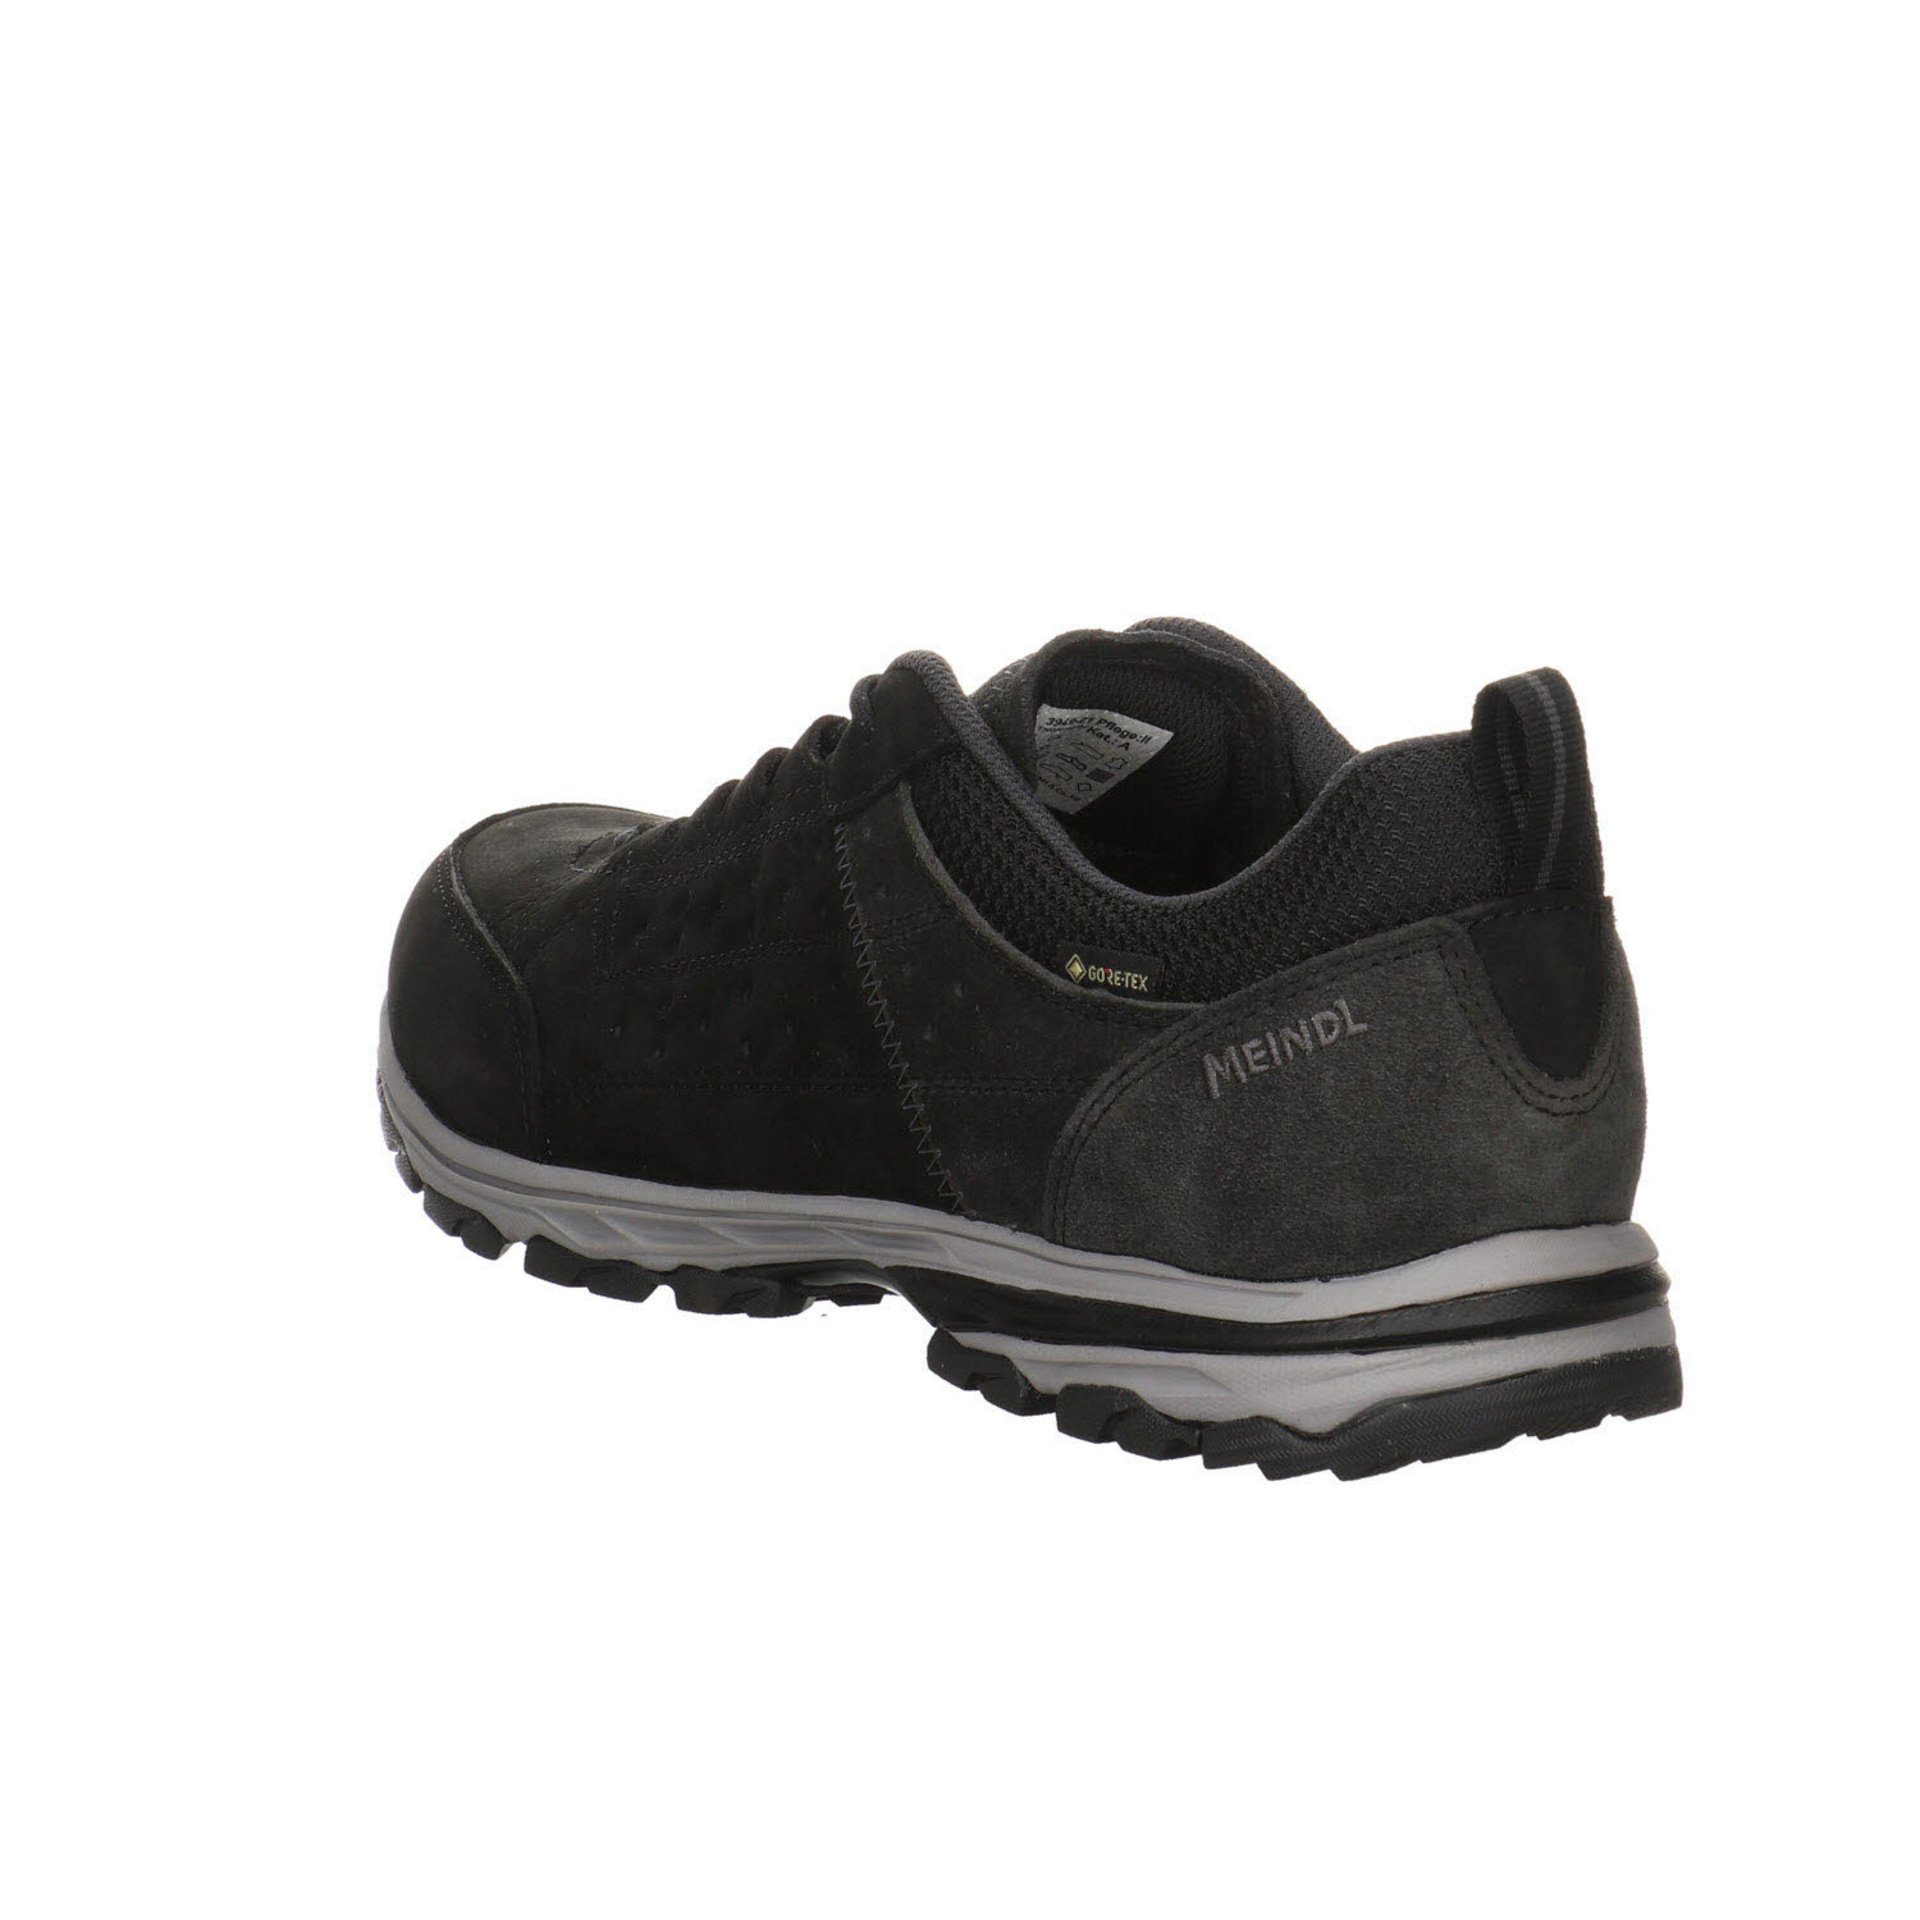 Meindl Herren GTX Outdoor Outdoorschuh Outdoorschuh dunkel Durban schwarz Leder-/Textilkombination Schuhe